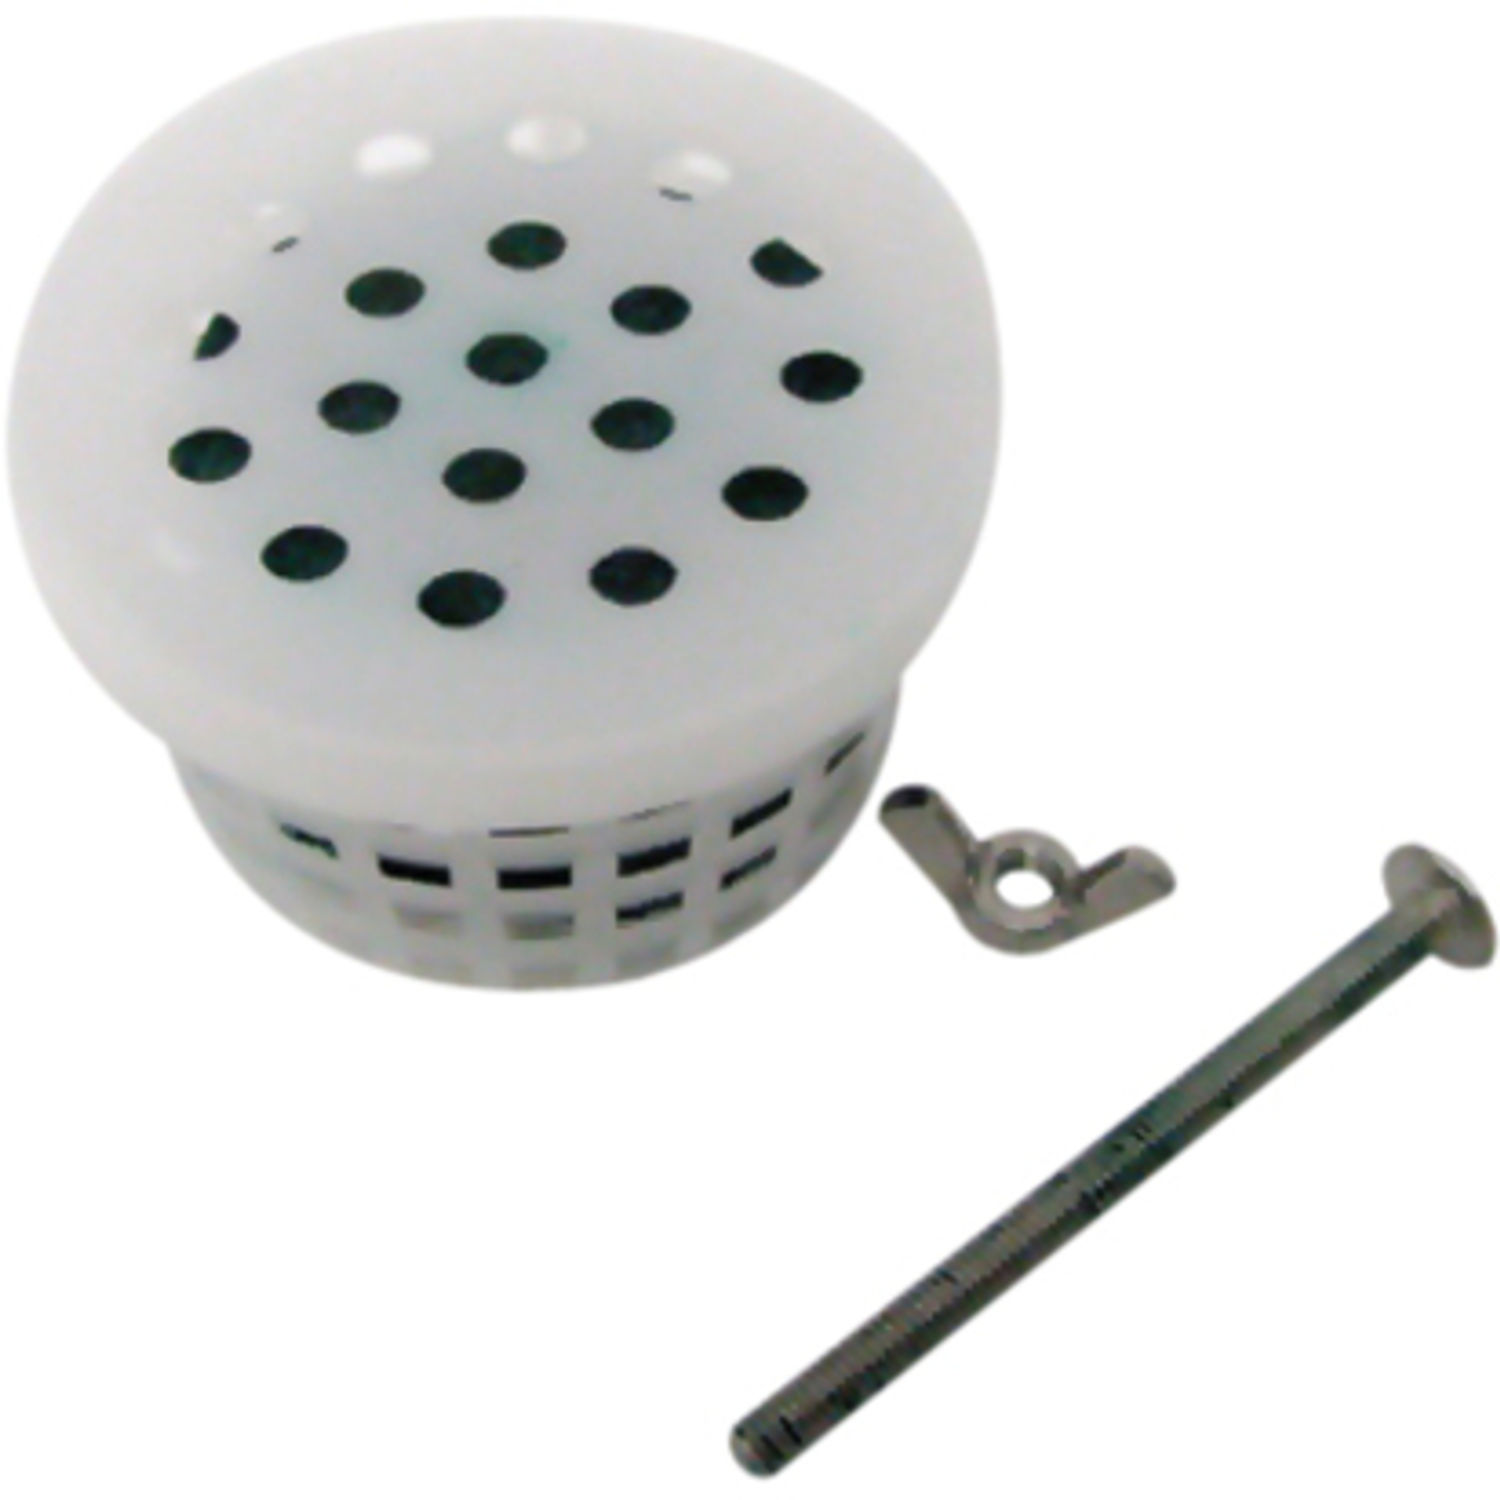 Z-Drain Odor Control Devices Odor Neutralizer, White